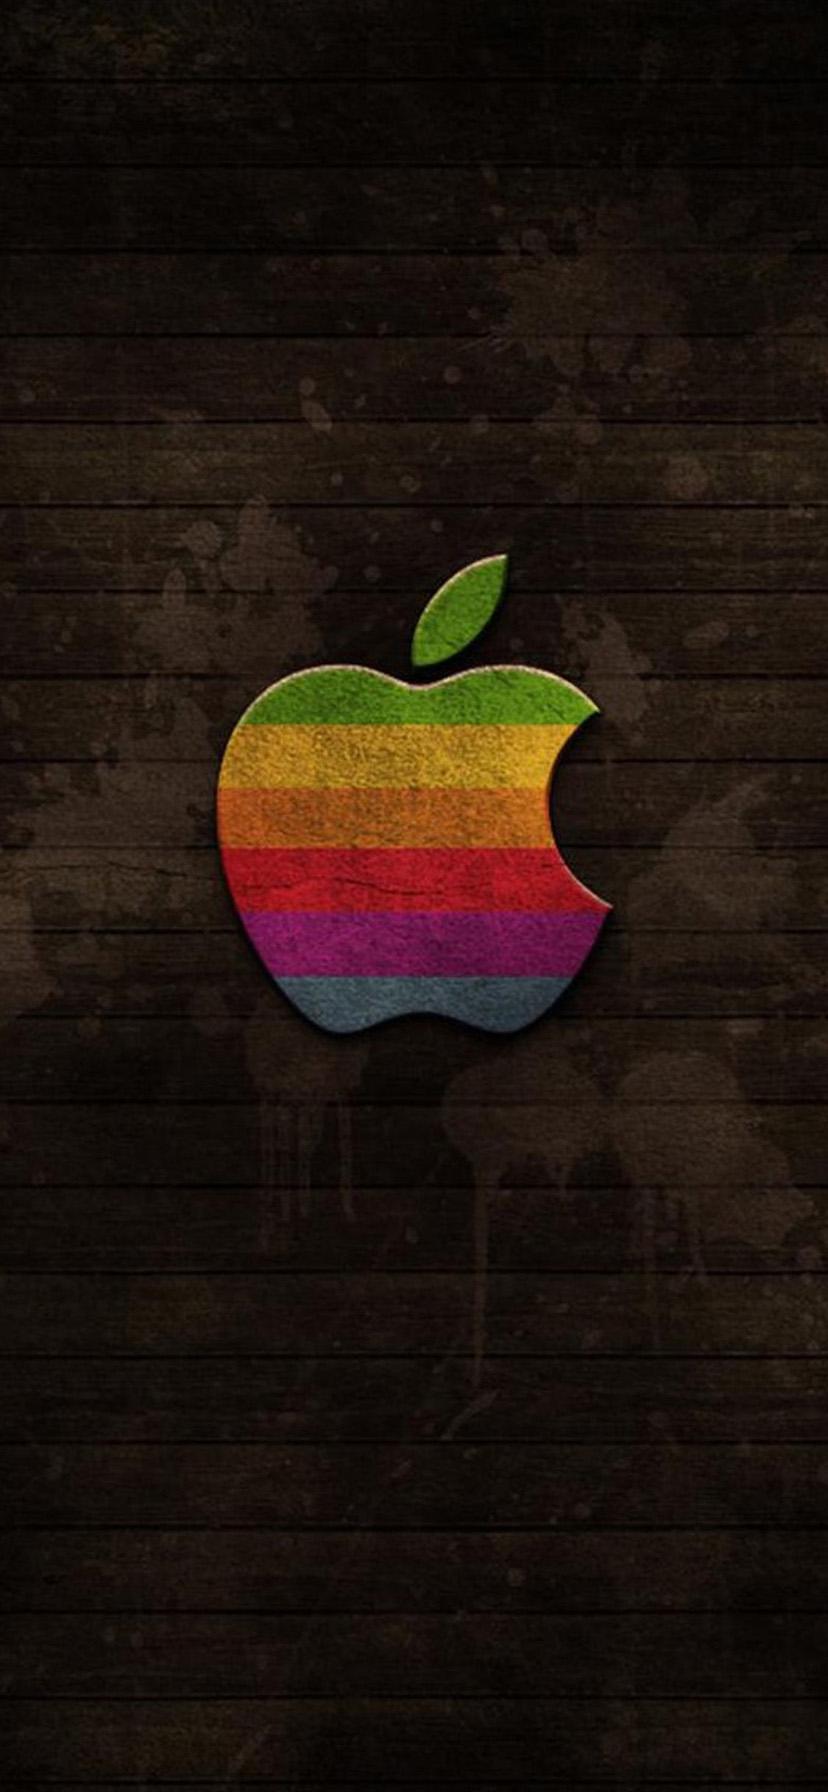 Apple Logo Wallpaper iPhone Xs x wallpaper request thread